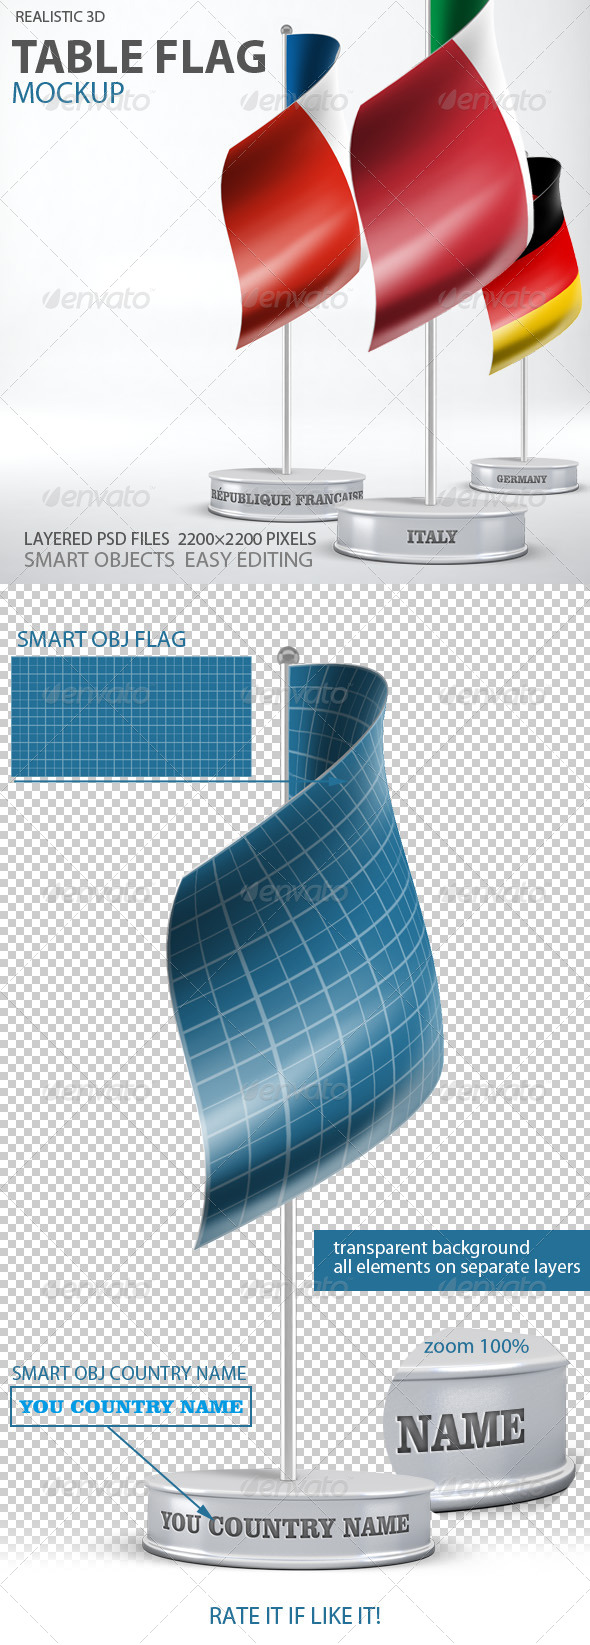 Download Table Flag Mockup By L5design Graphicriver